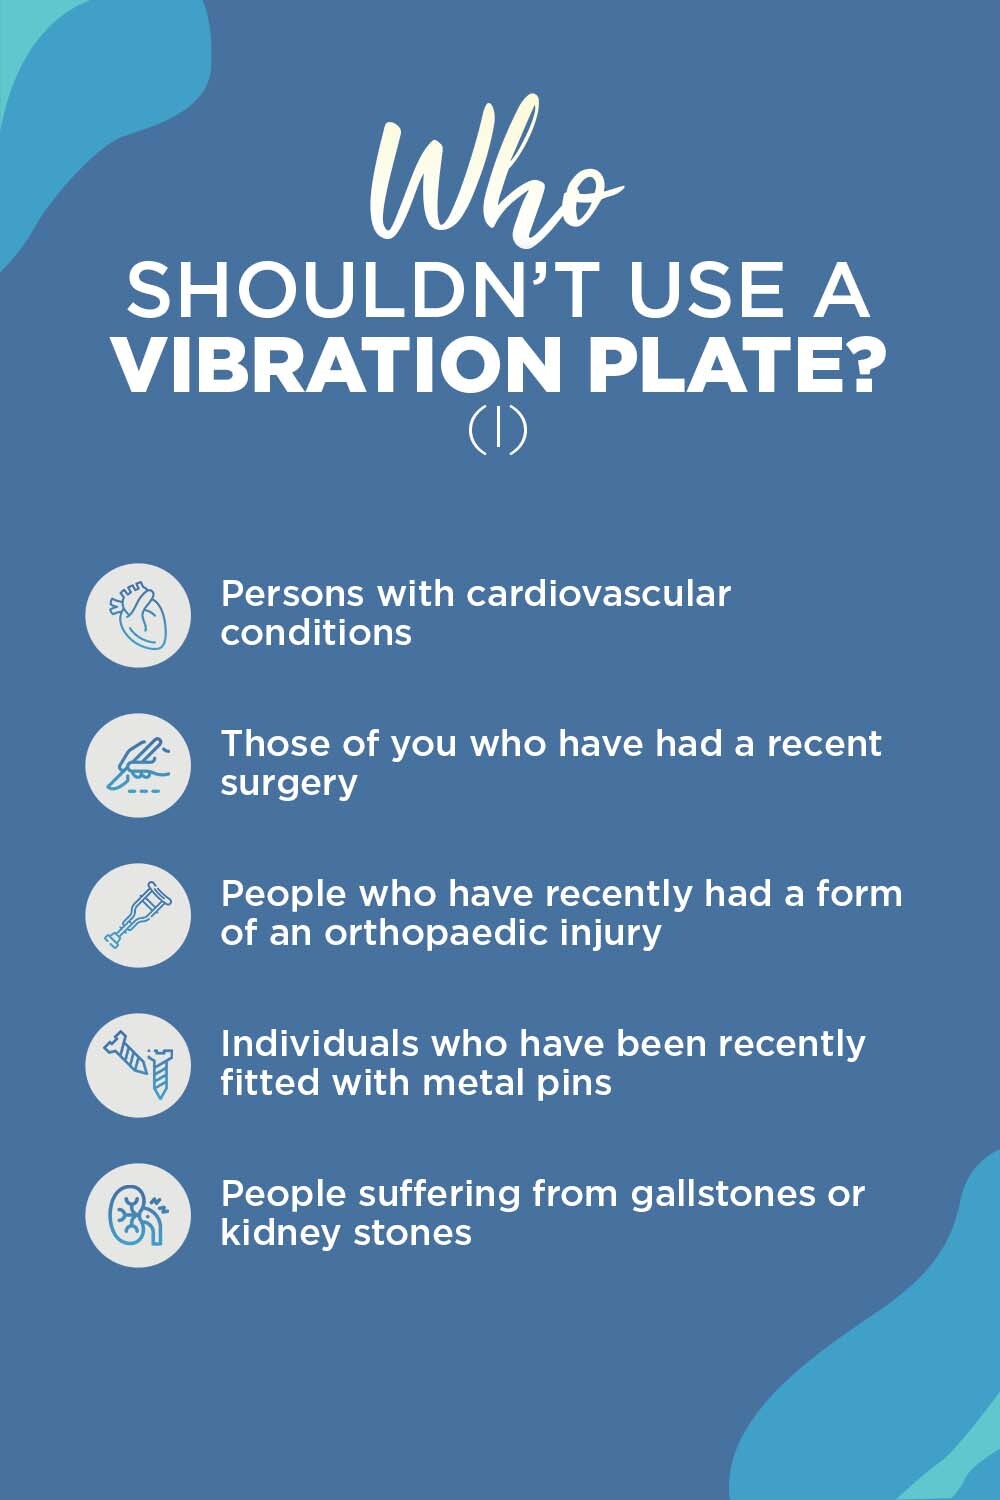 who cannot use vibration plates